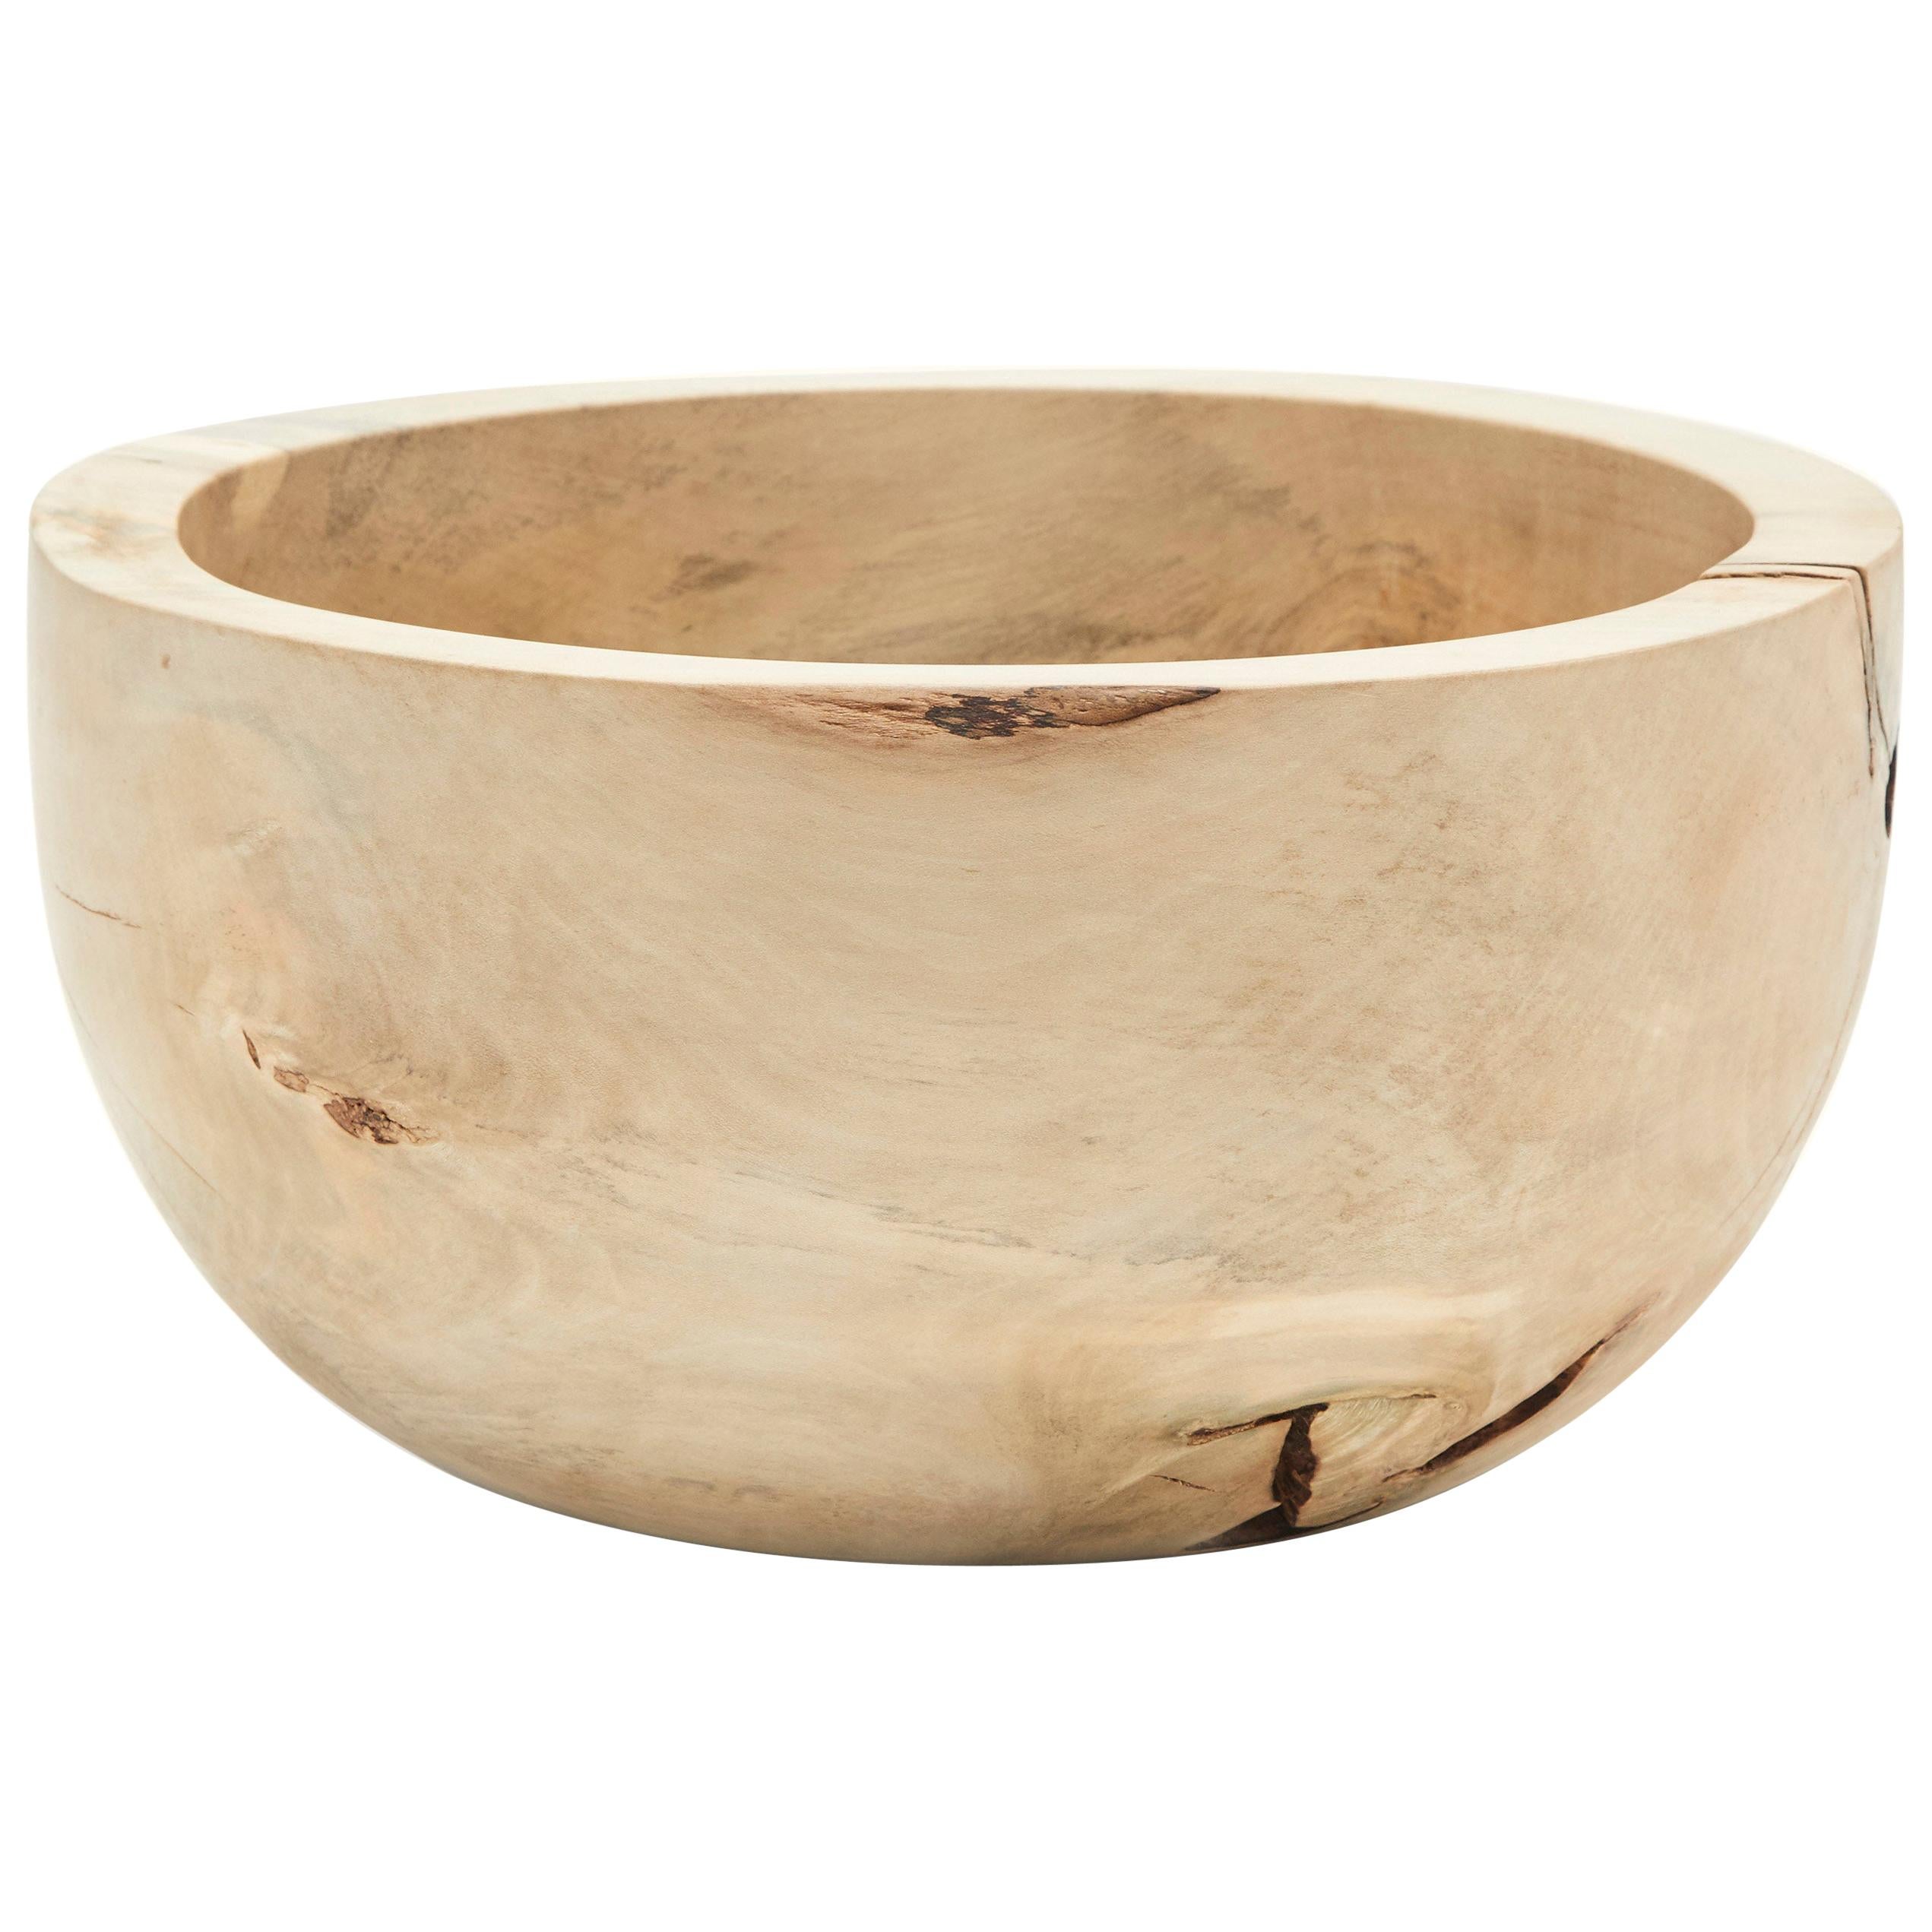 Wooden Bowl by Wyatt Speight Rhue